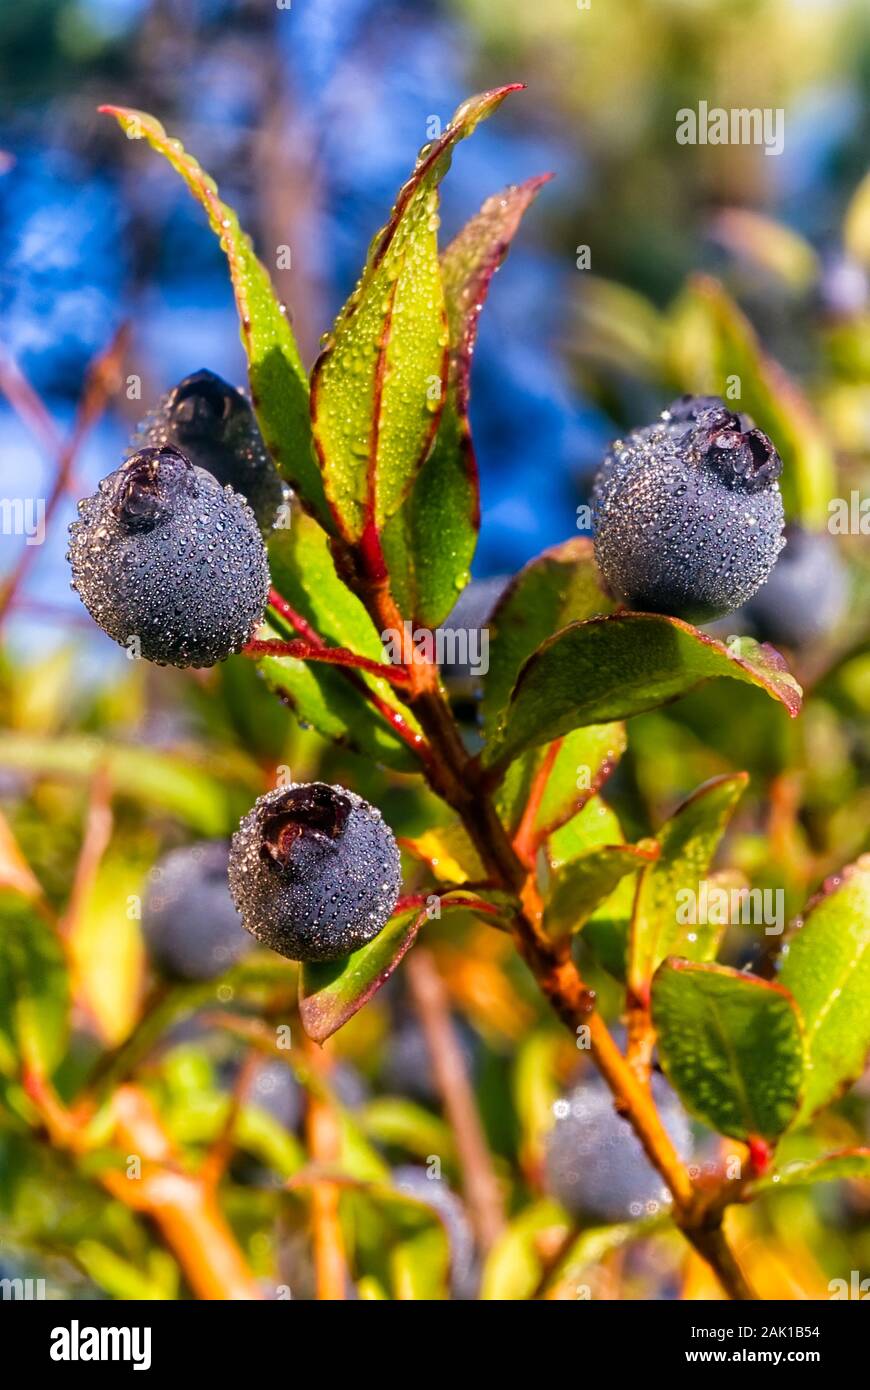 blue berries on myrtle branches, Myrtus communis Stock Photo